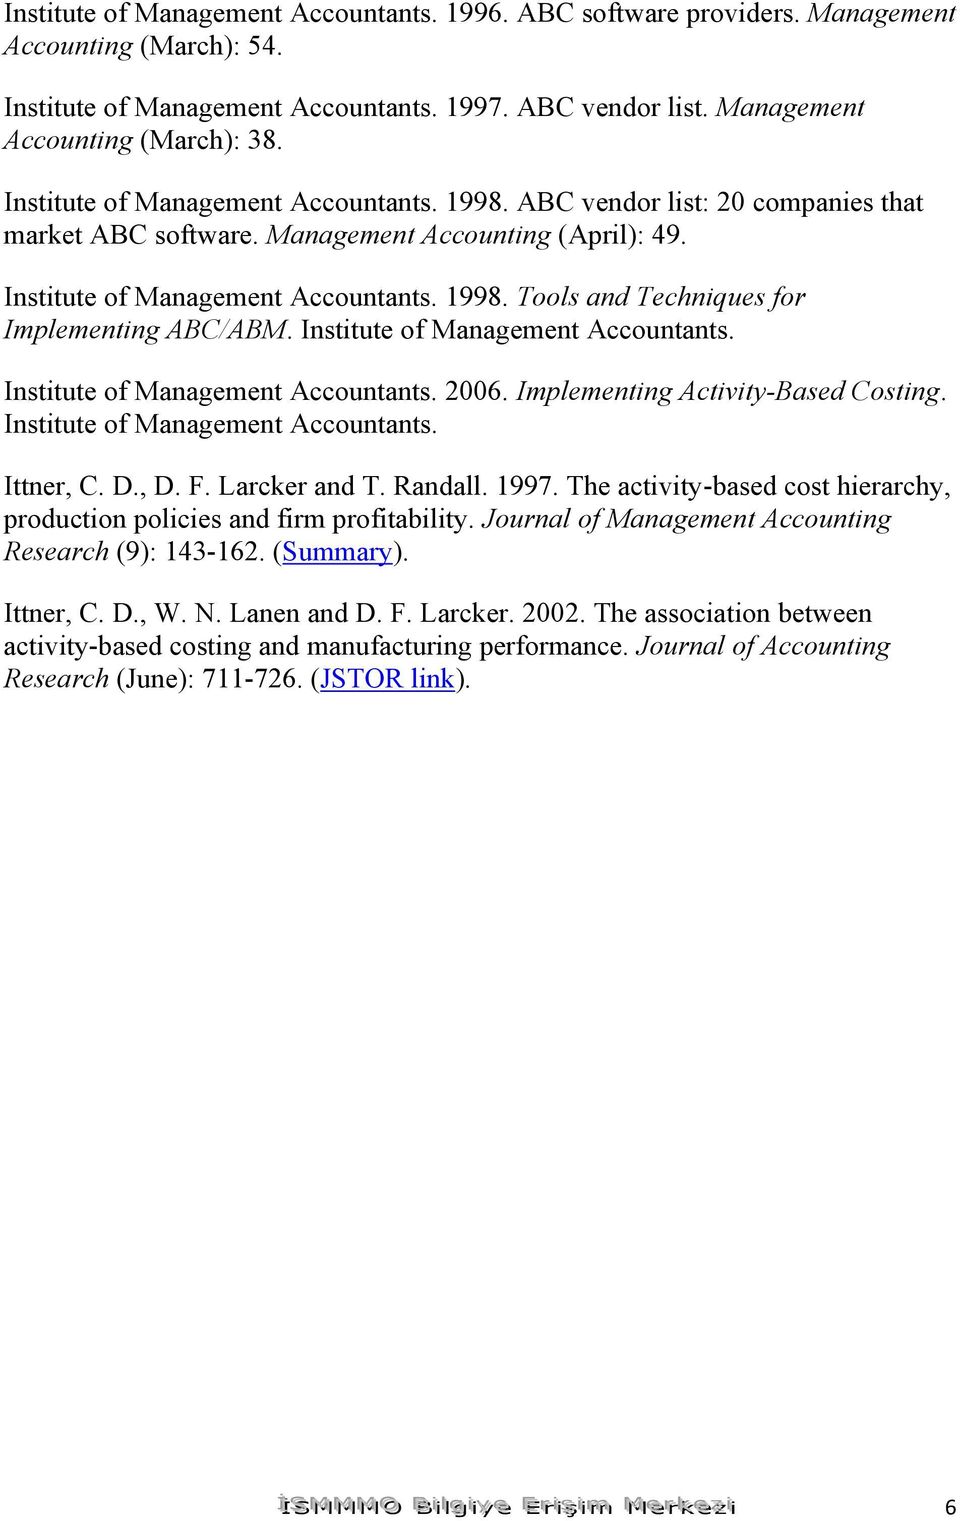 Institute of Management Accountants. Institute of Management Accountants. 2006. Implementing Activity-Based Costing. Institute of Management Accountants. Ittner, C. D., D. F. Larcker and T. Randall.